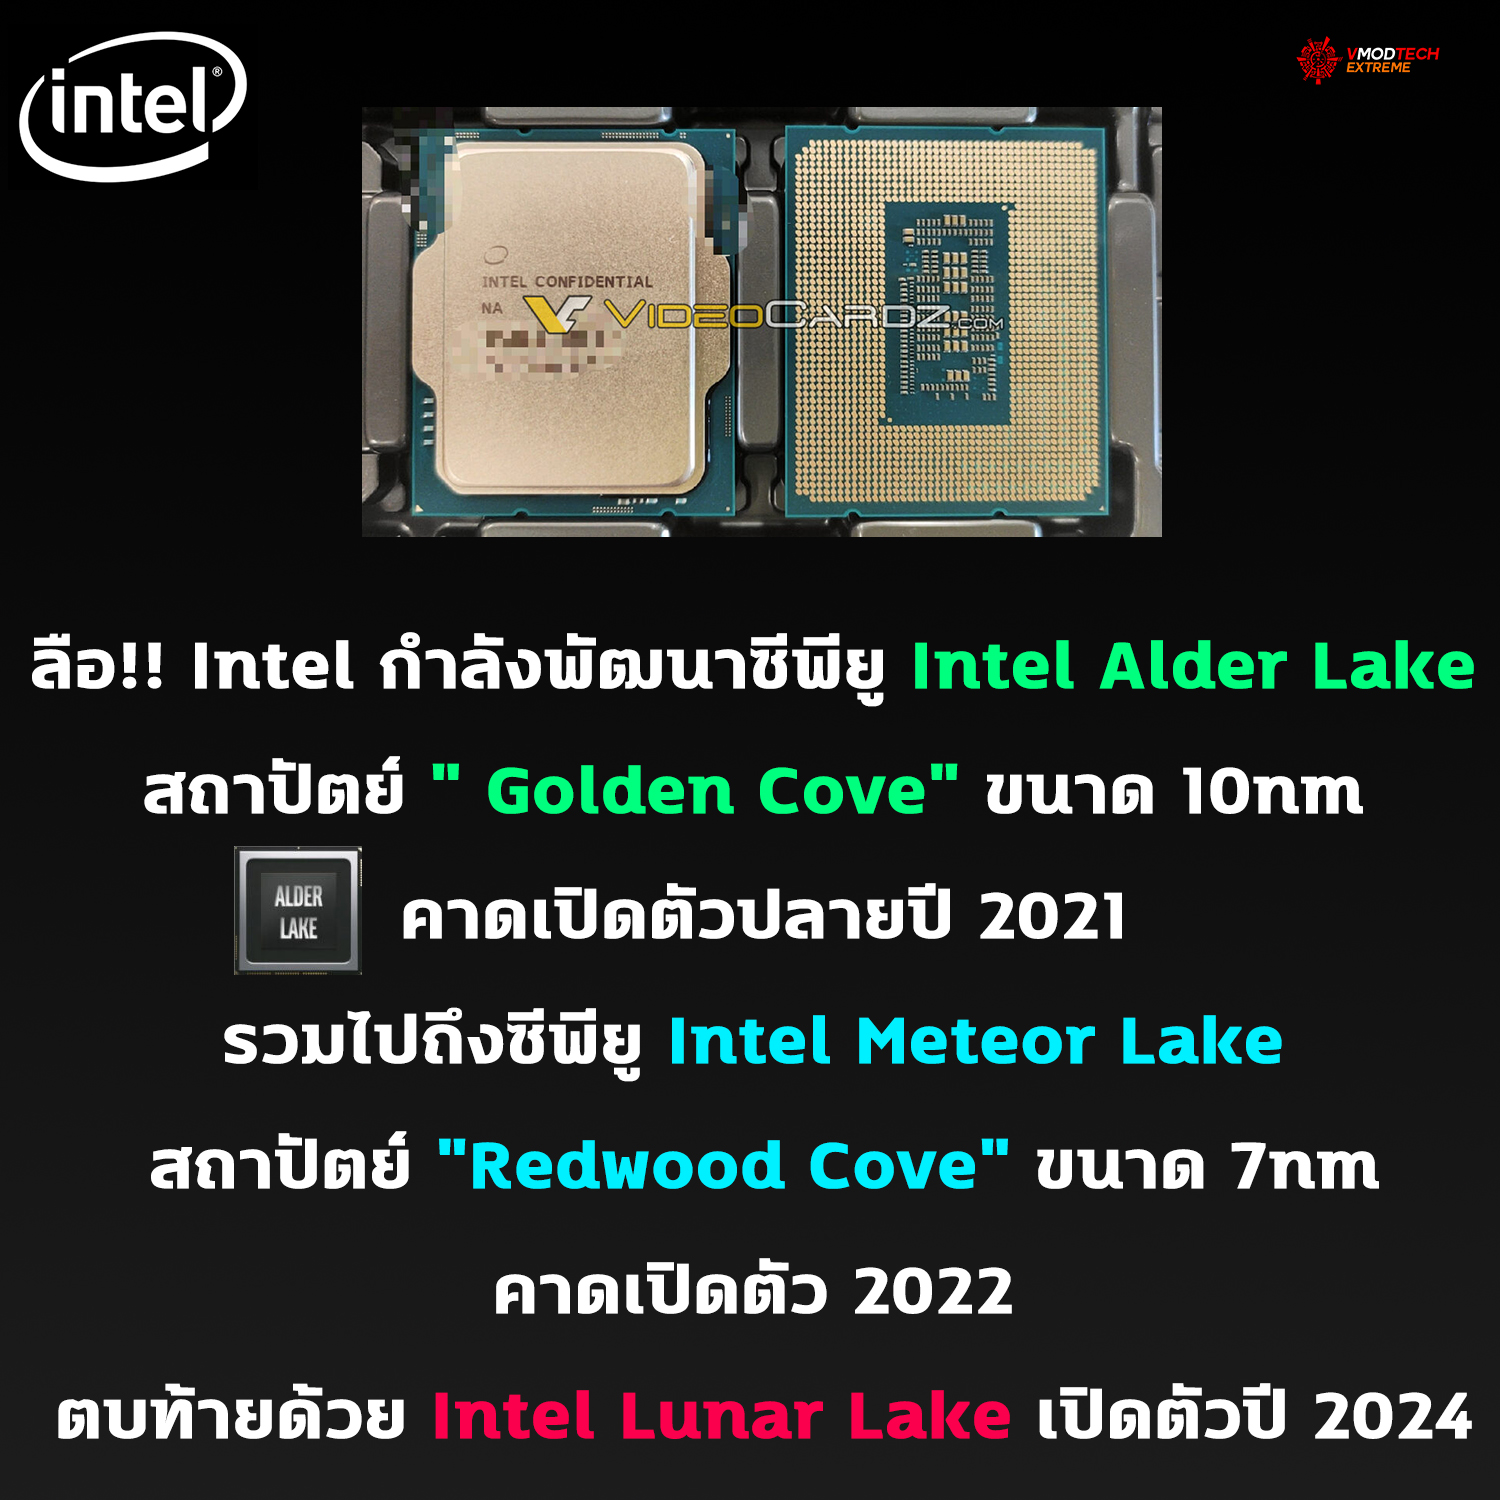 intel alder lake 2021 ลือ!! Intel กำลังพัฒนาซีพีู Intel Alder Lake สถาปัตย์ Golden Cove ขนาด 10nm รวมไปถึงซีพียู Intel Meteor Lake สถาปัตย์ Redwood Cove ขนาด 7nm ที่พร้อมเปิดตัวในอนาคต